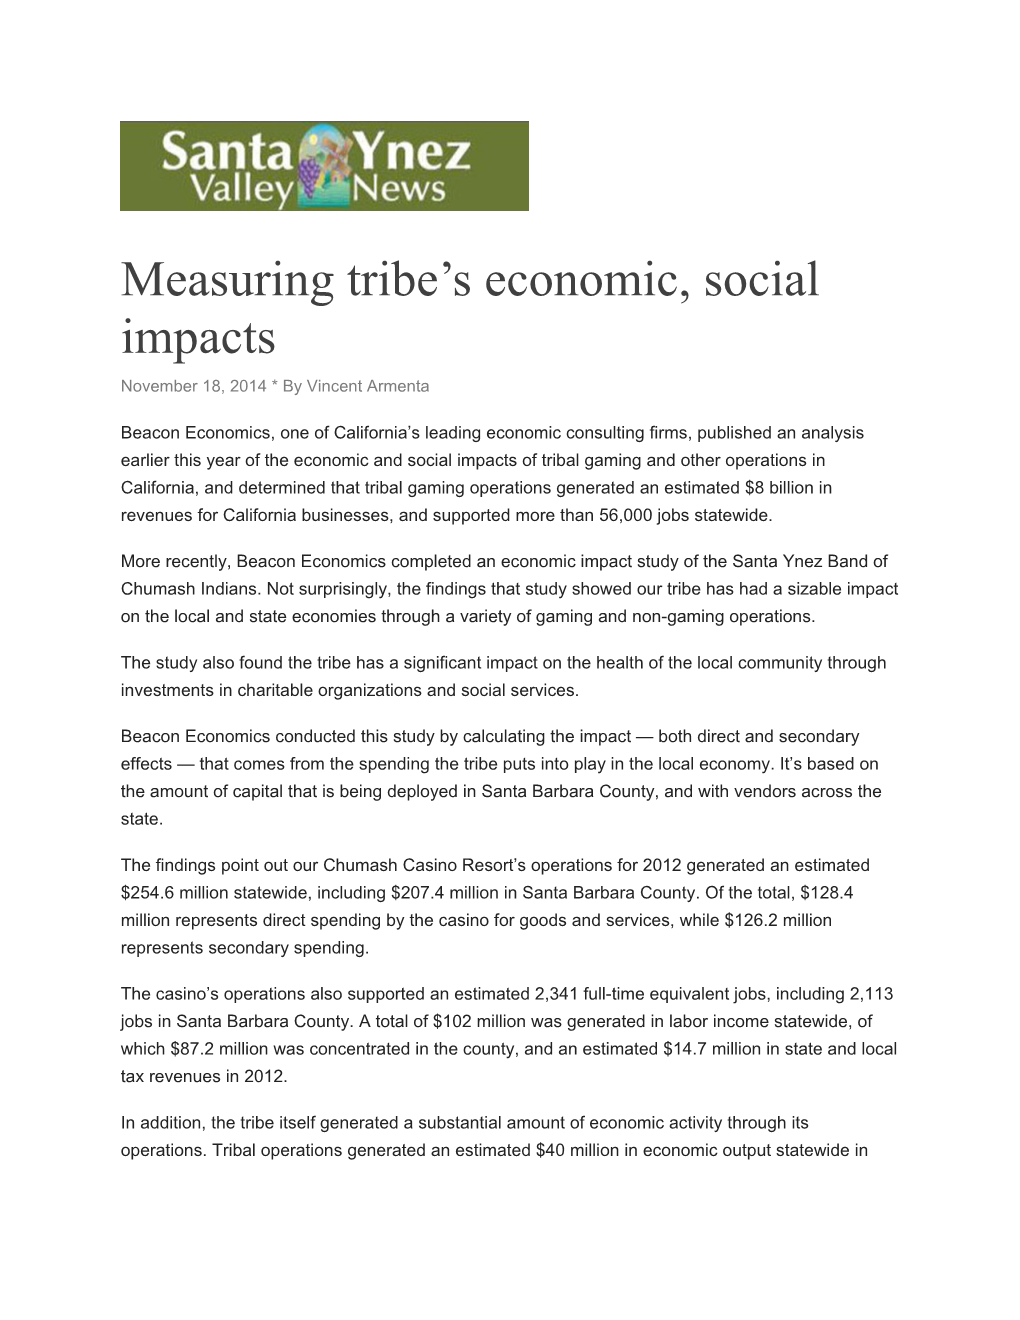 Measuring Tribe S Economic, Social Impacts